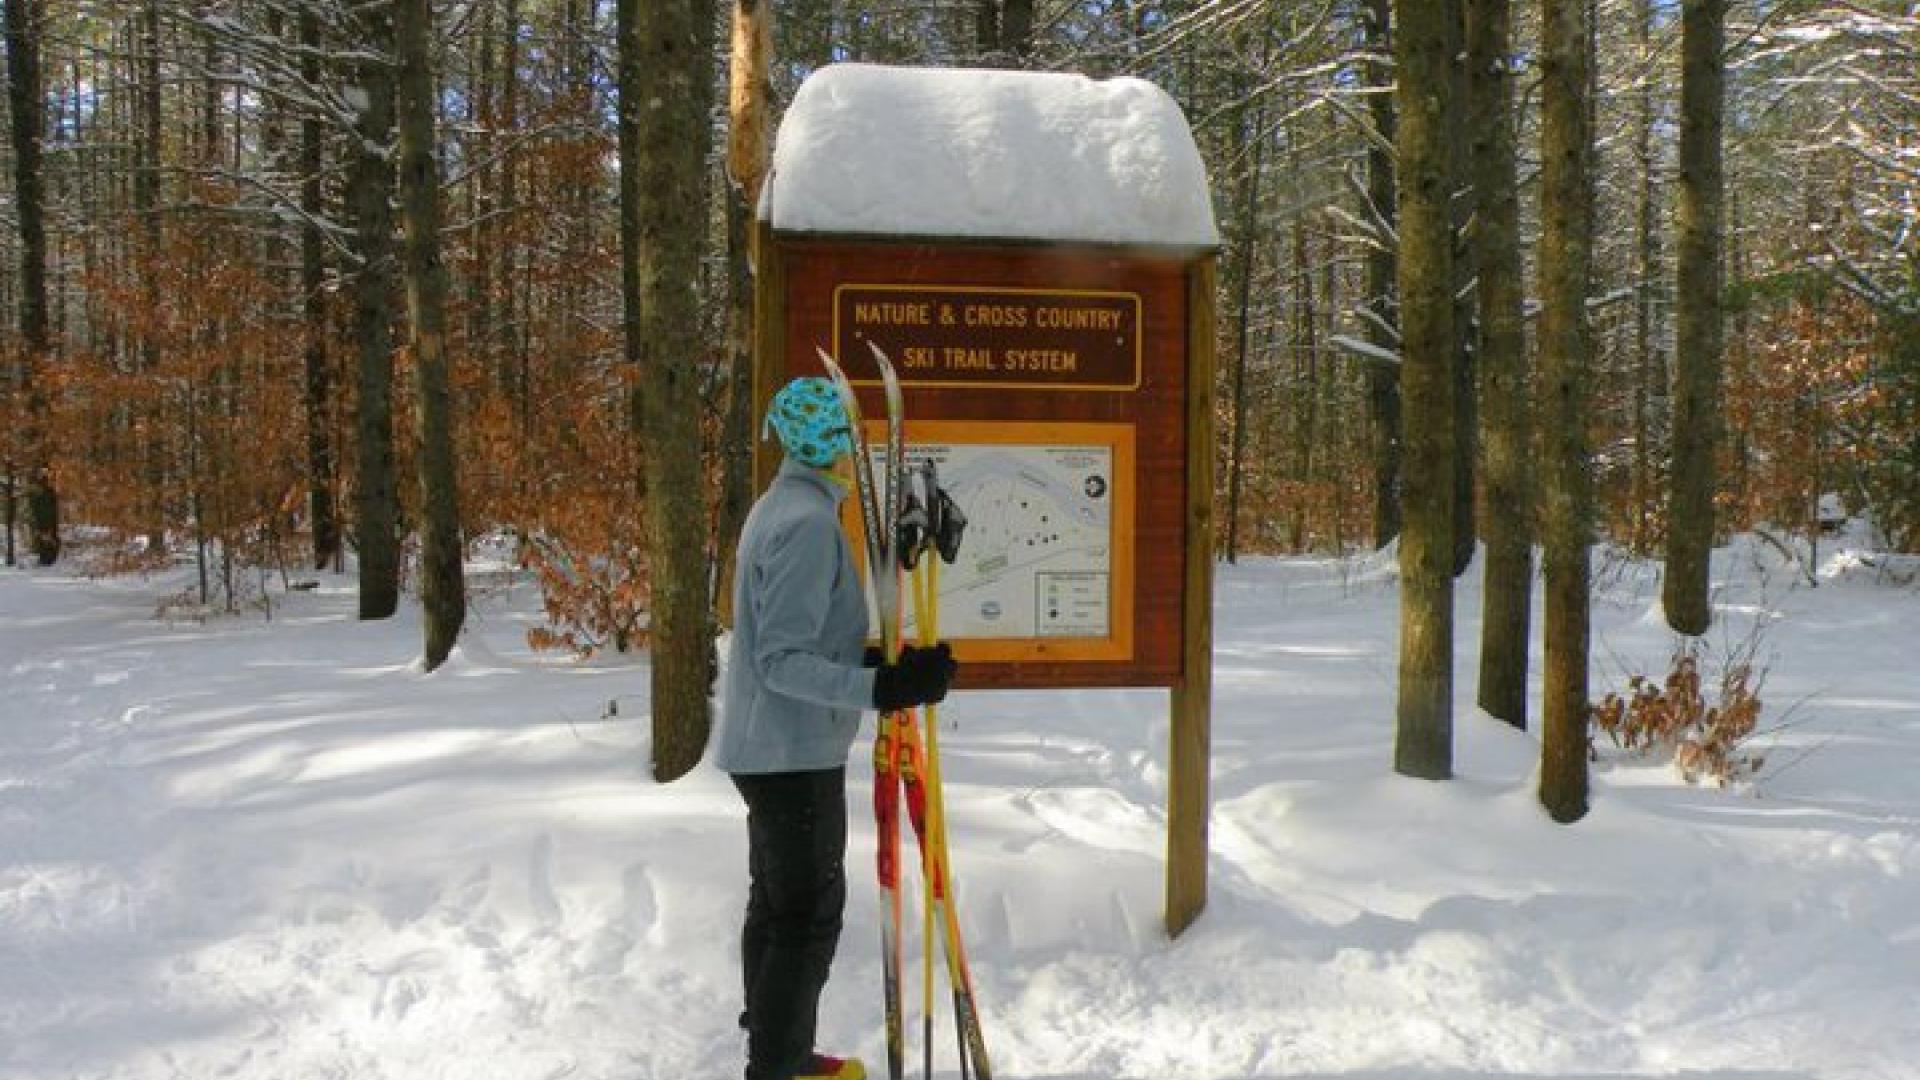 Warren County Nature Trail & Nordic Ski System